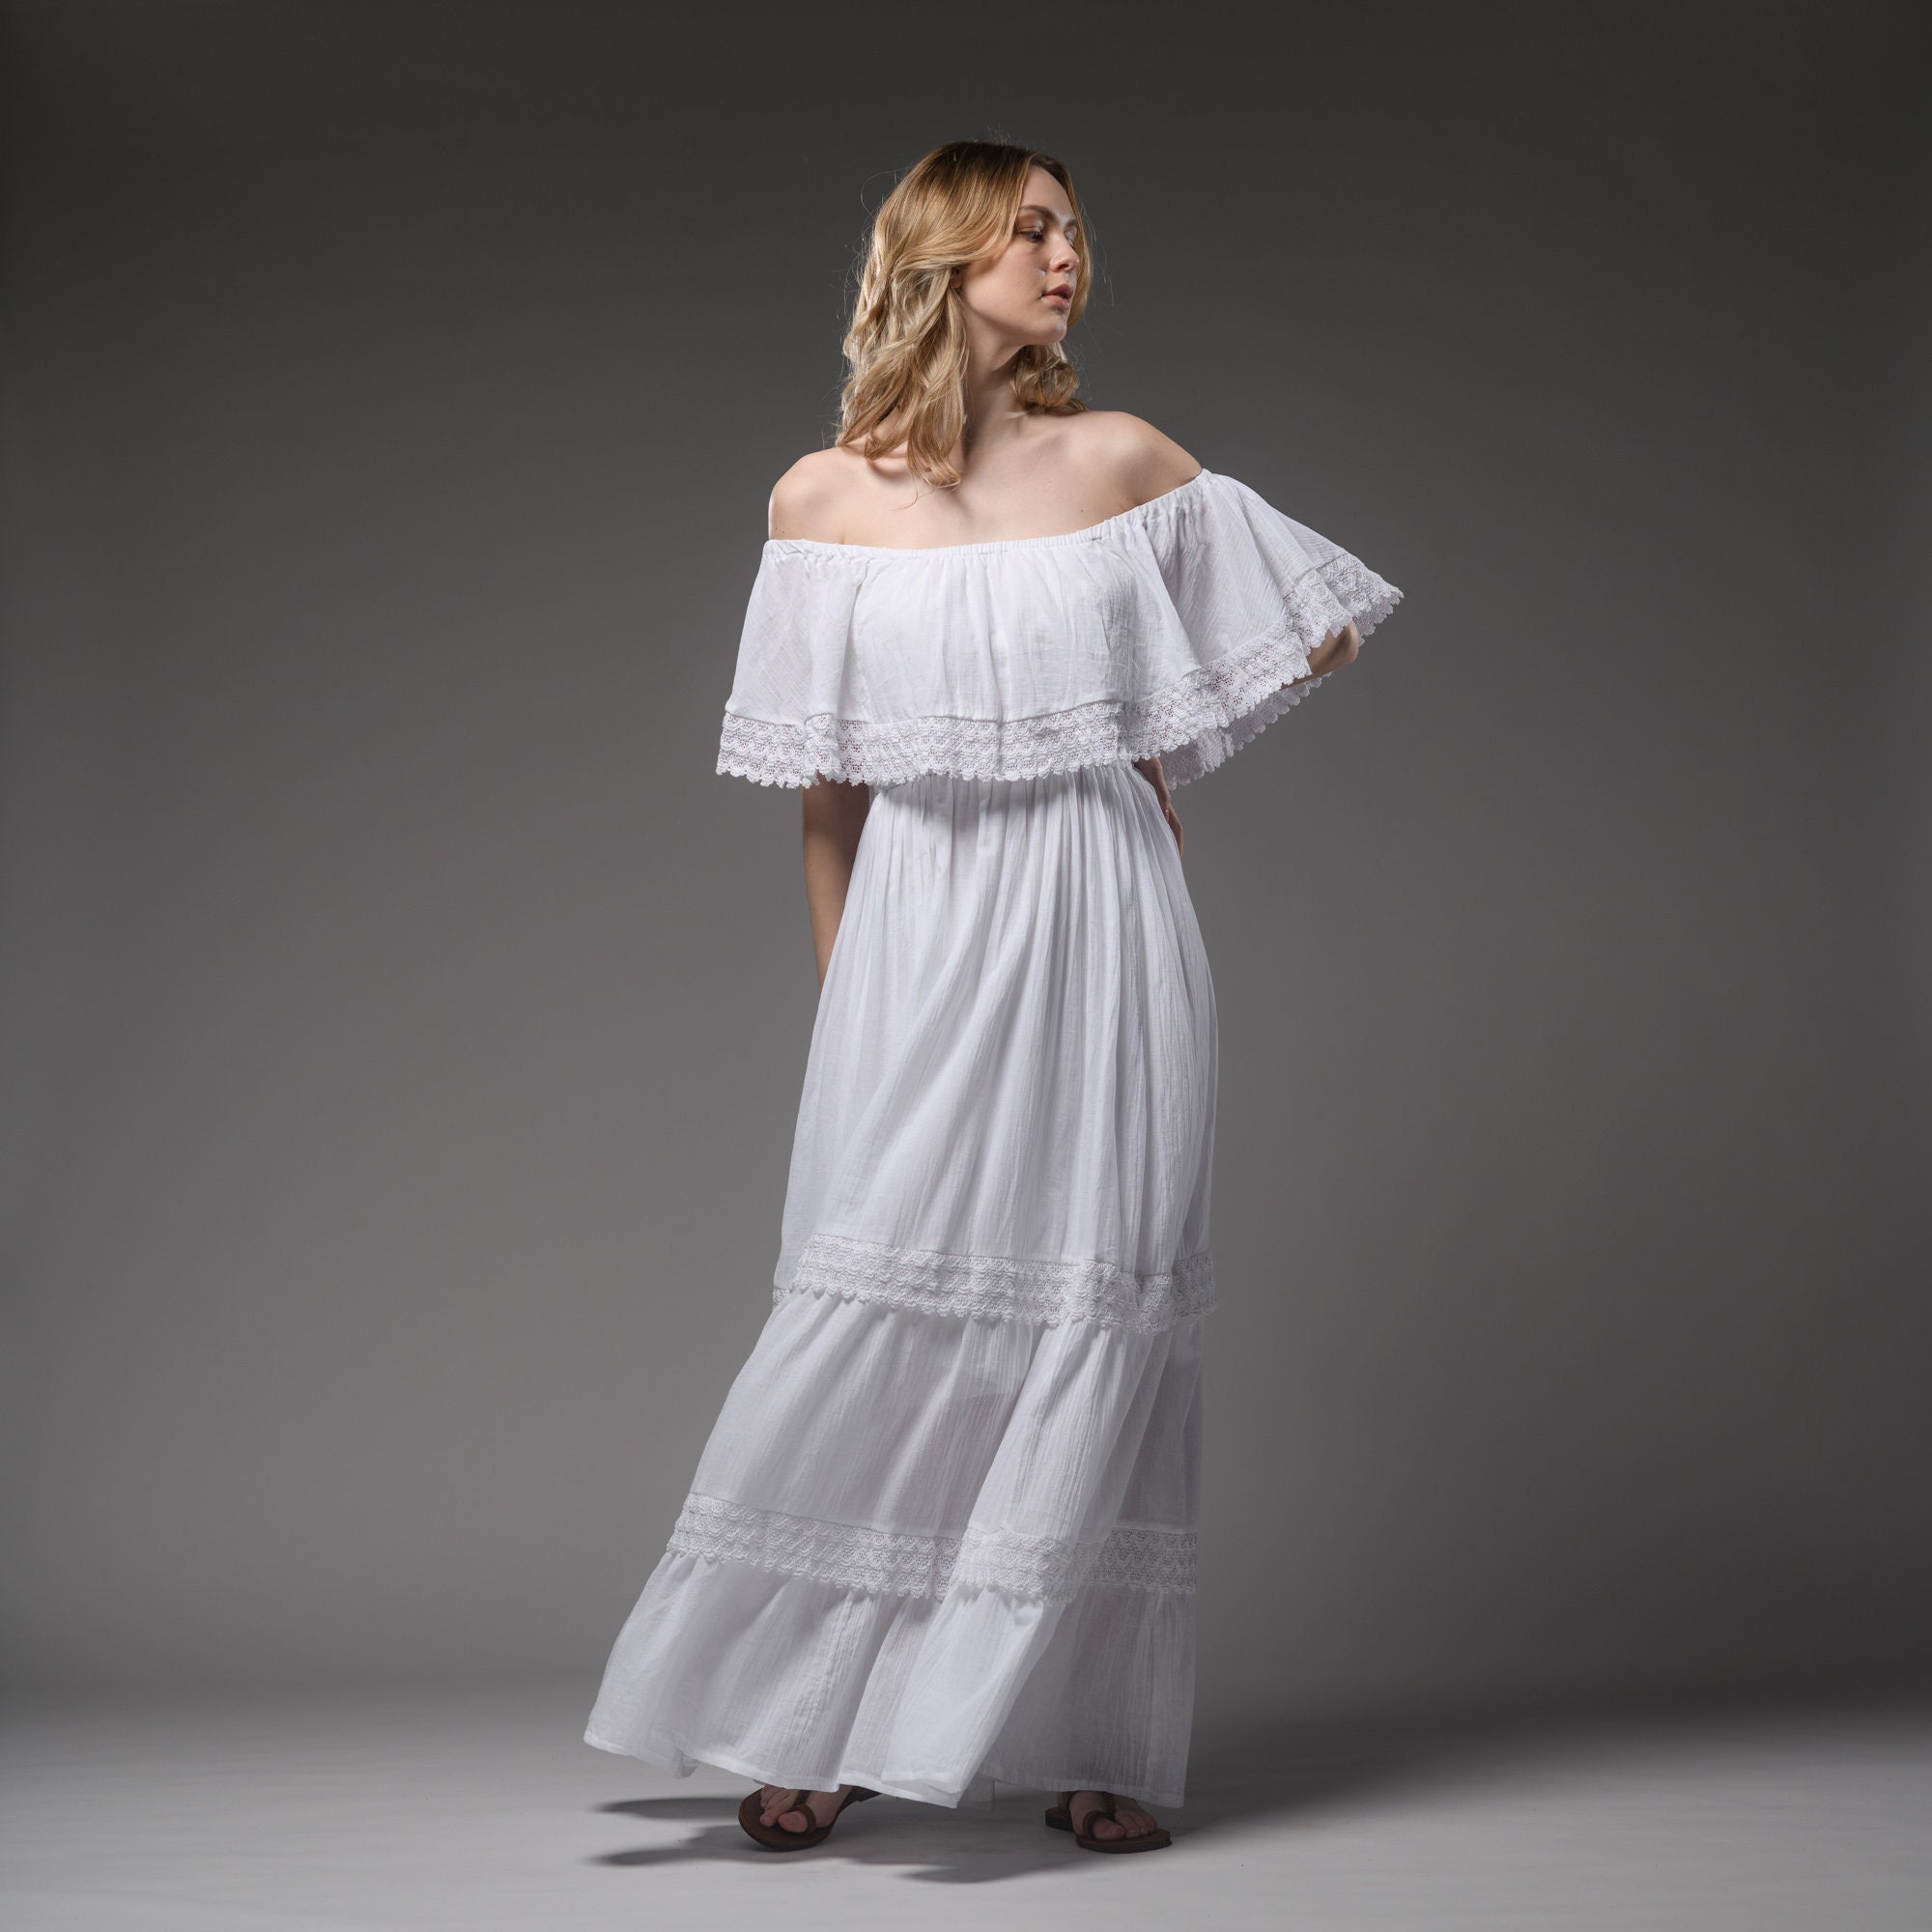 White Cotton Bohemian Dress Romantic Maxi Dress Elegant Cotton Wedding  Dress Hippie Festival Lace Detail Dress pregnant Dress 